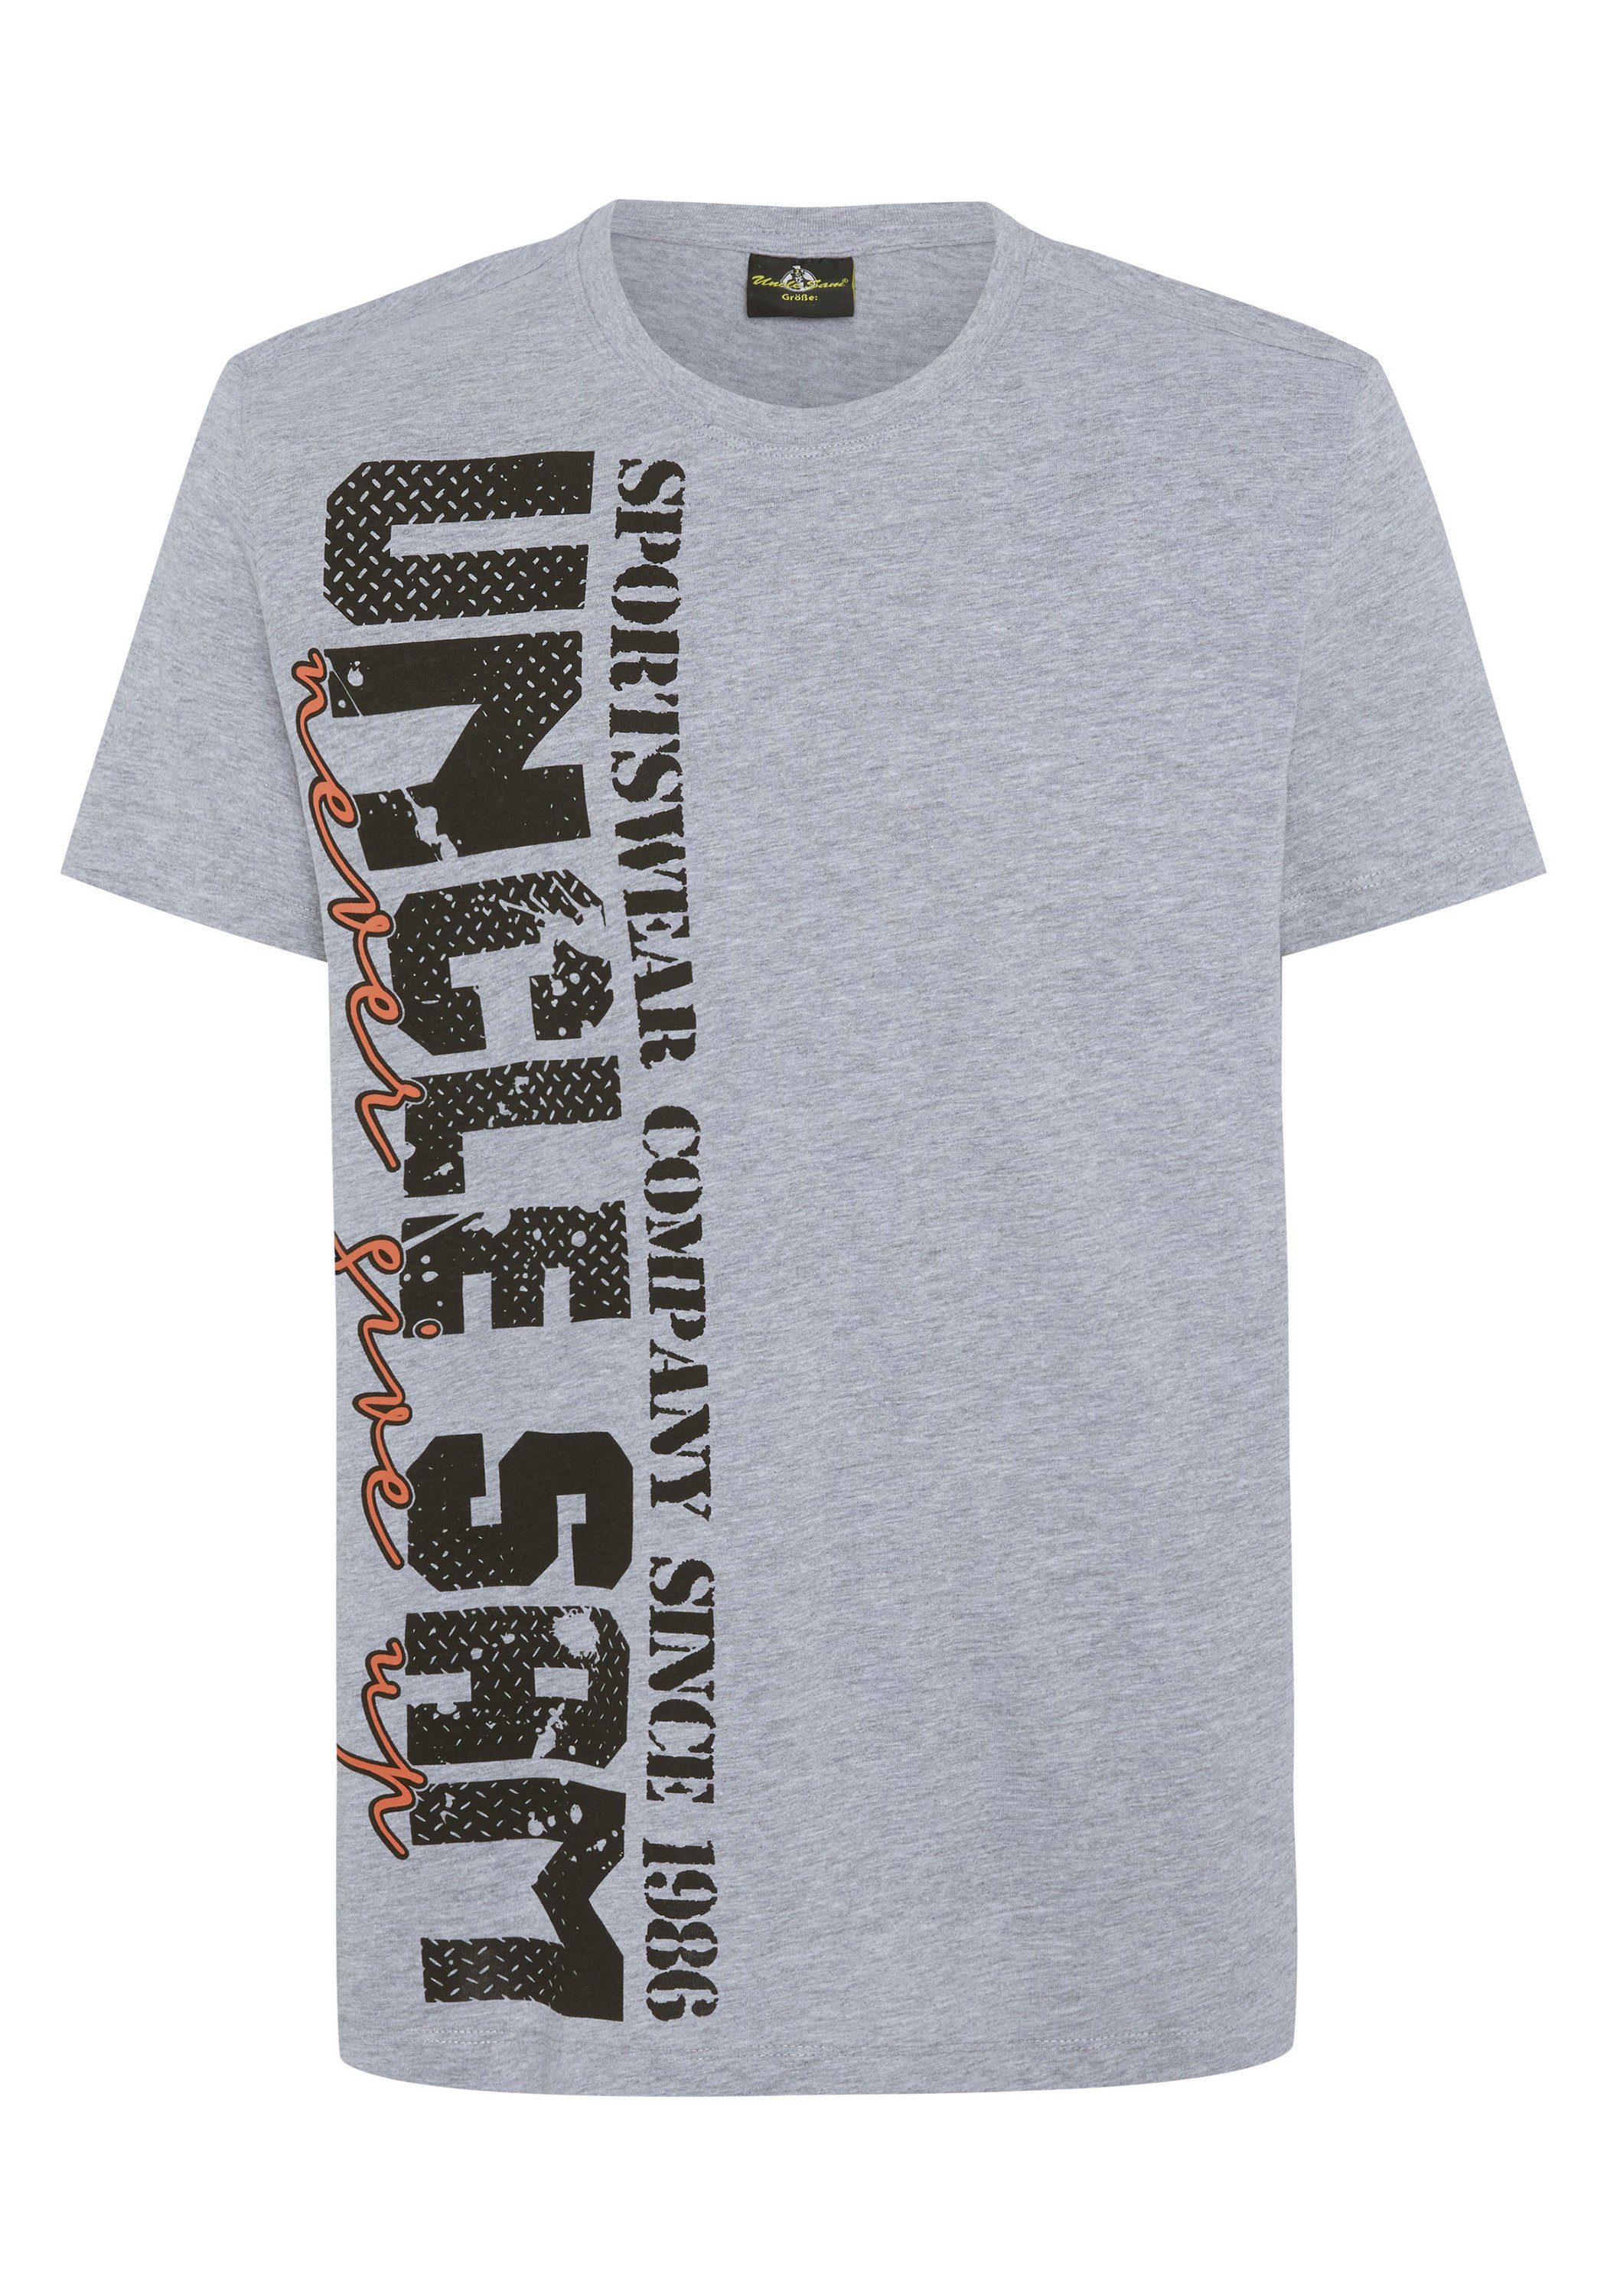 Uncle Sam Grey 1 Single-Jersey Mid aus Melange Grey Mid Melange Print-Shirt soften